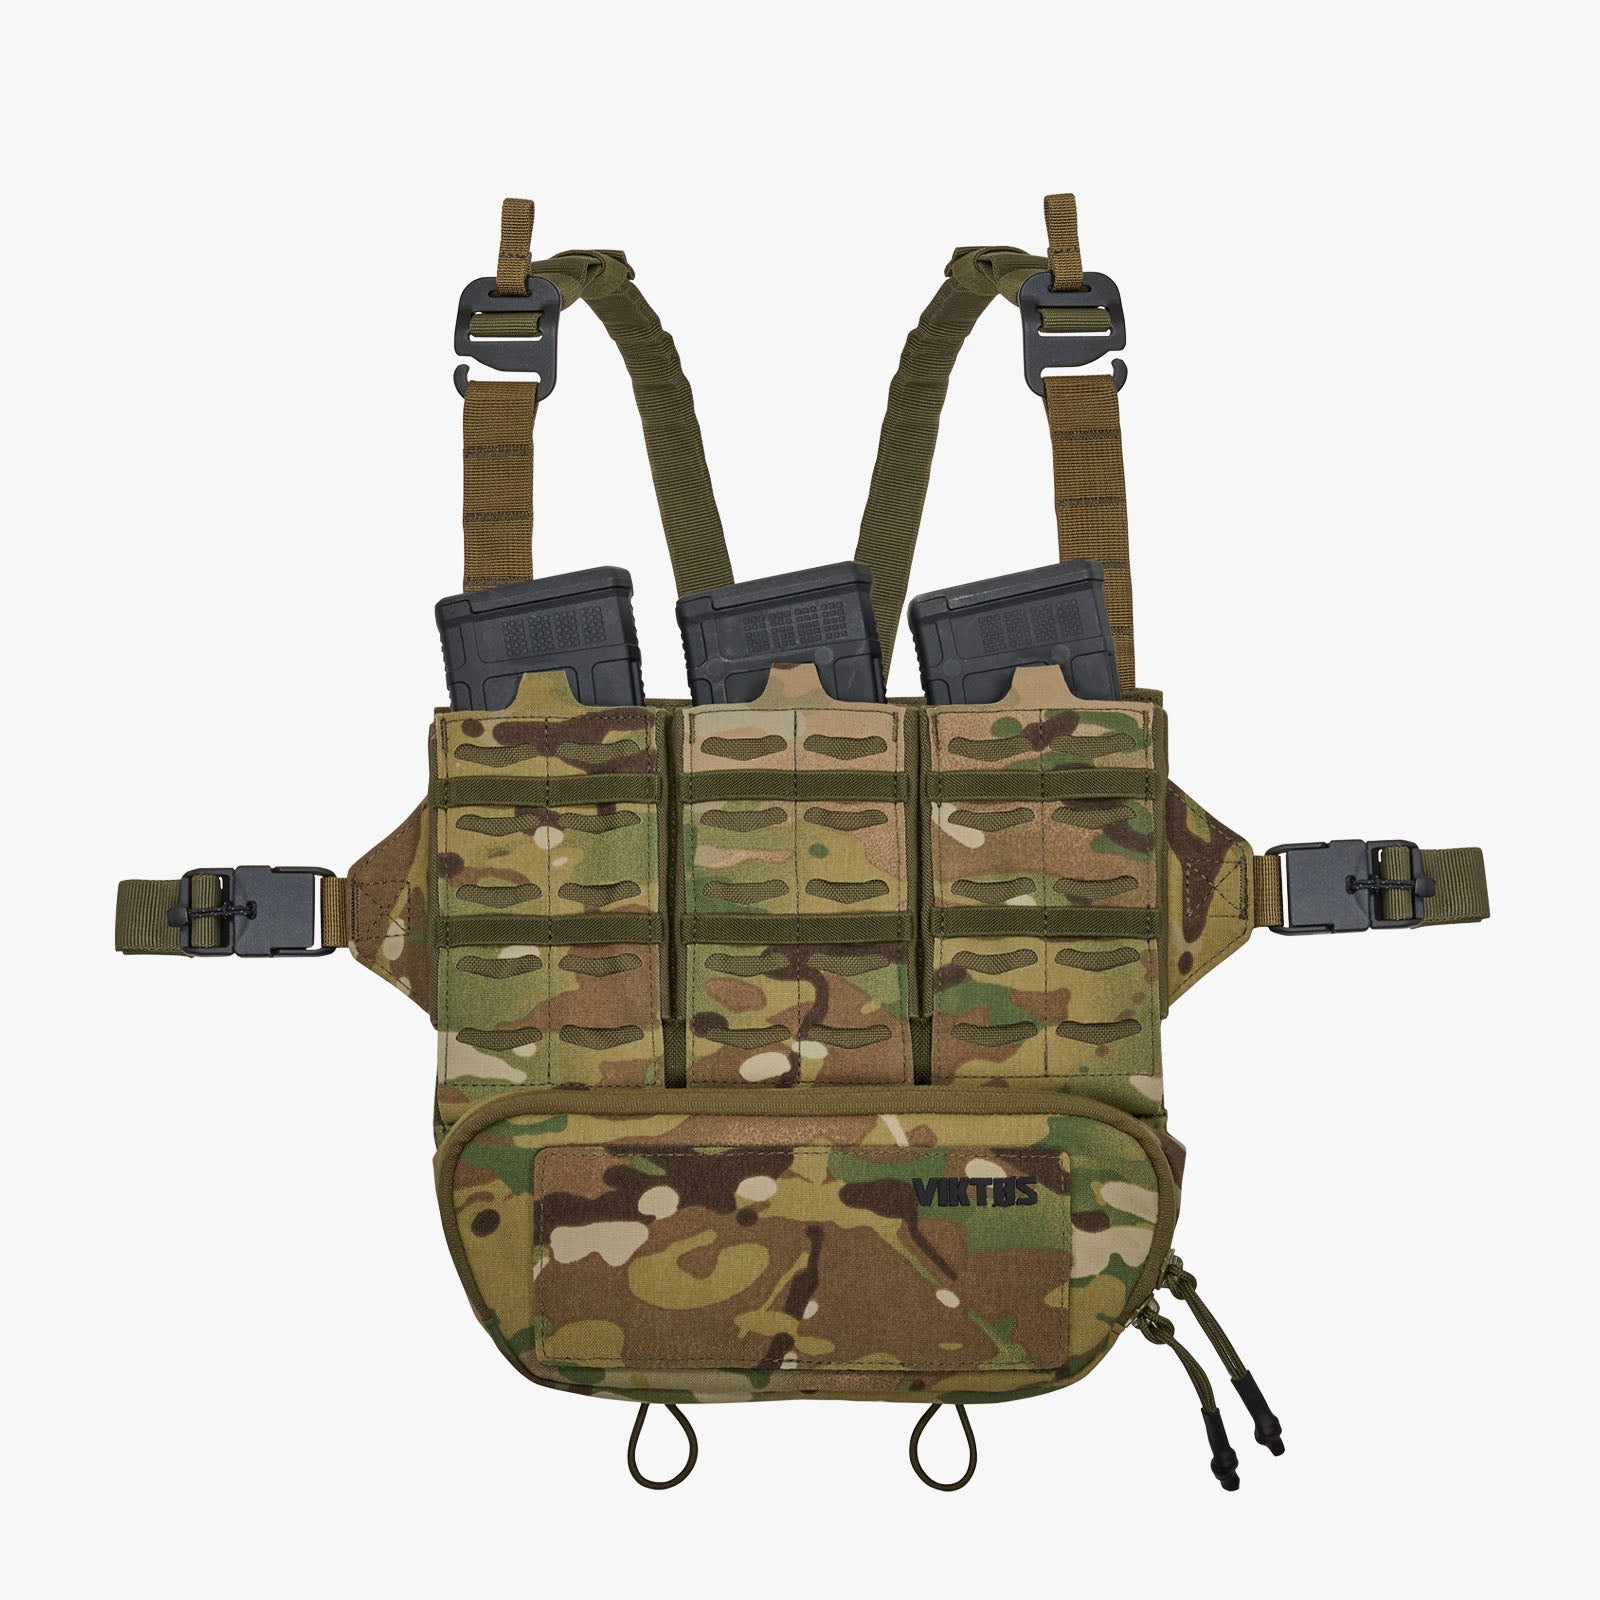 VIKTOS Taculus MX Chest Rig Bags, Packs and Cases VIKTOS Multicam Tactical Gear Supplier Tactical Distributors Australia